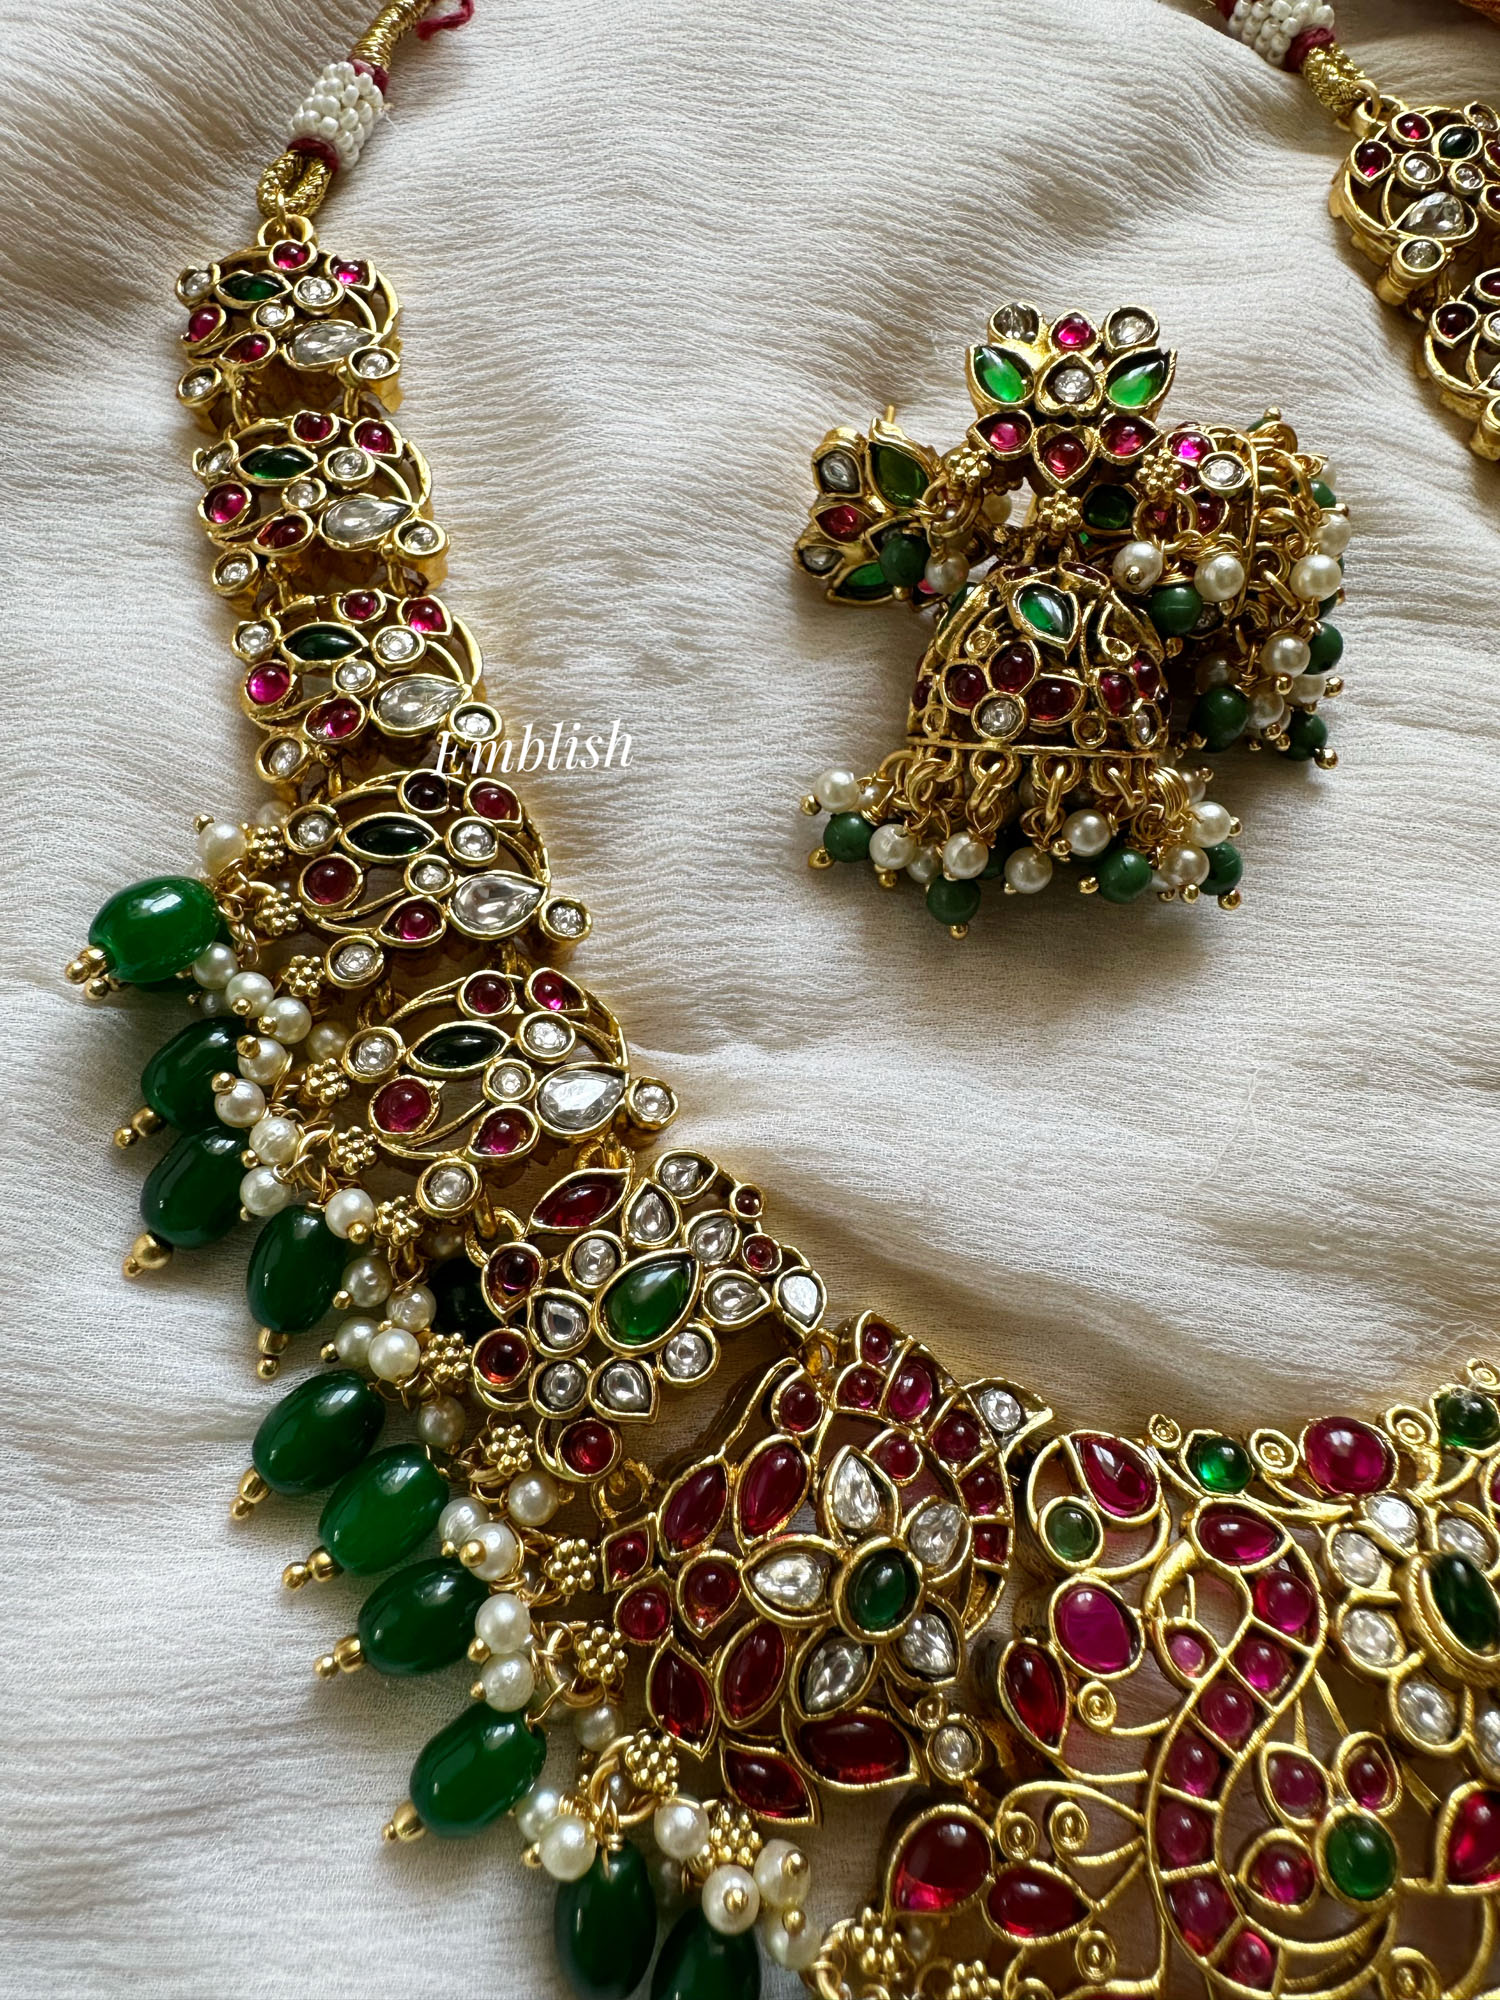 Grand kemp non idol dual beads neckpiece - Green Beads